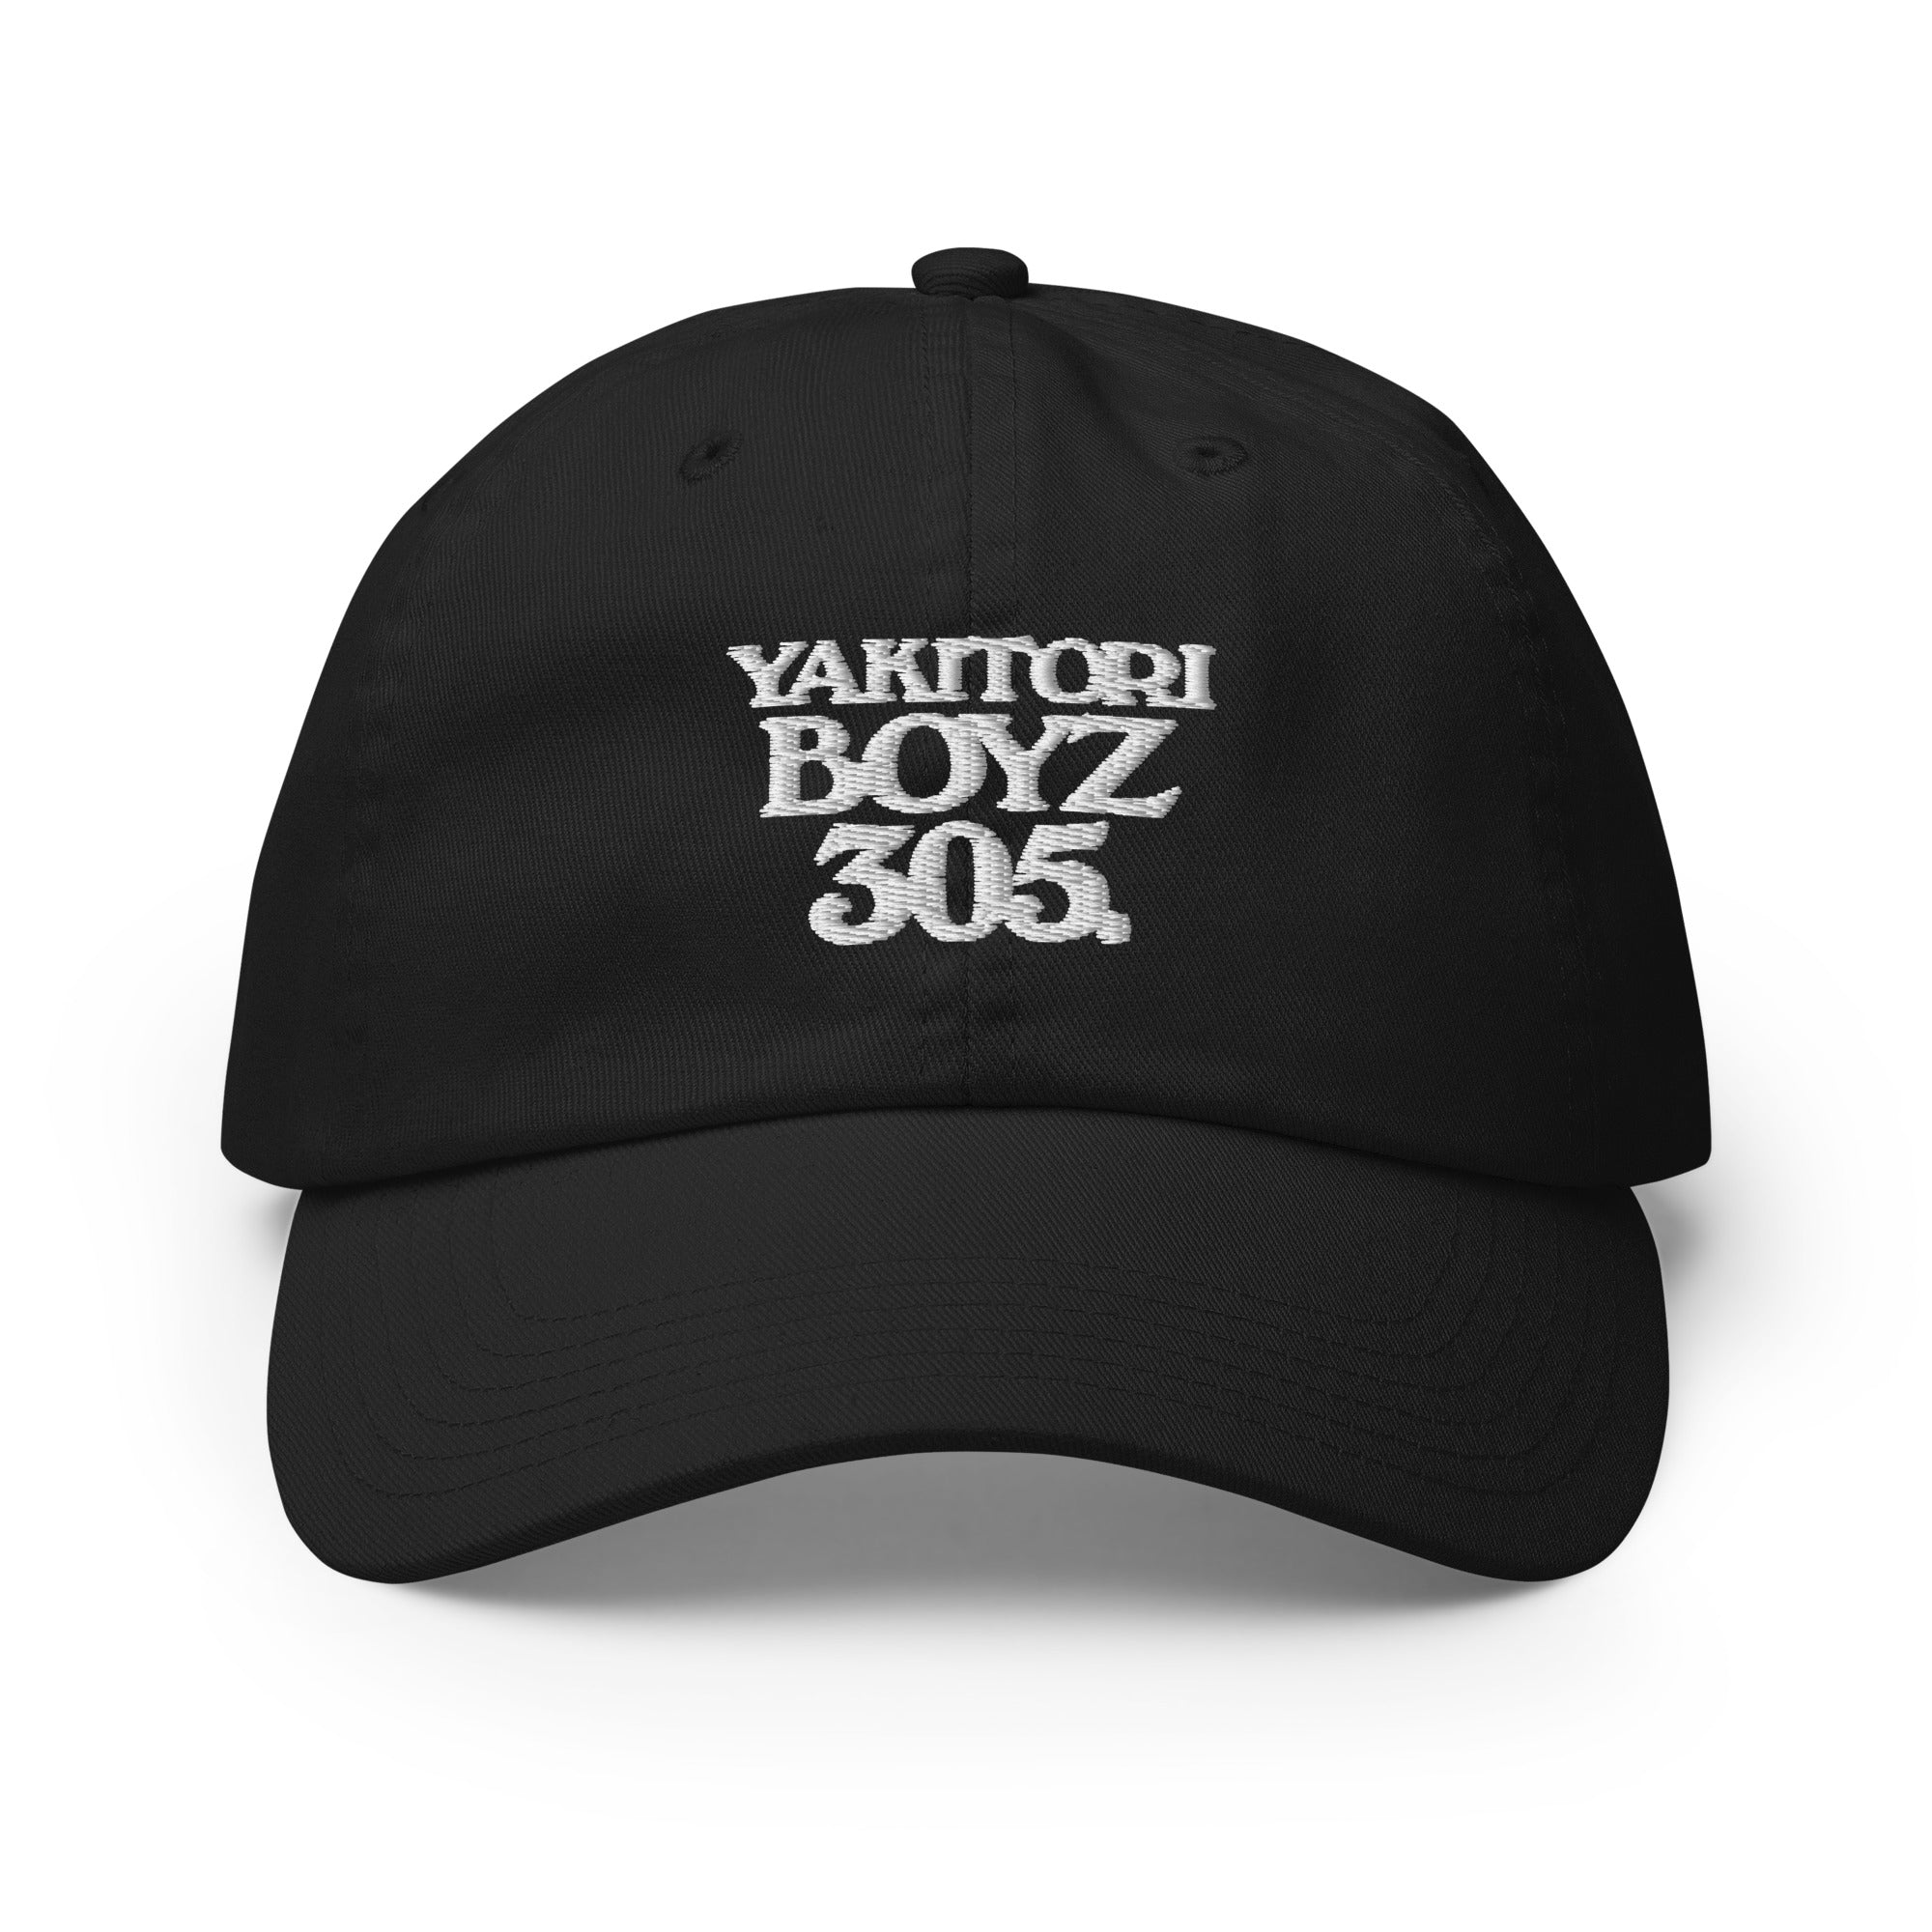 Yakitori Boyz "305" Champion Dad Cap in Black